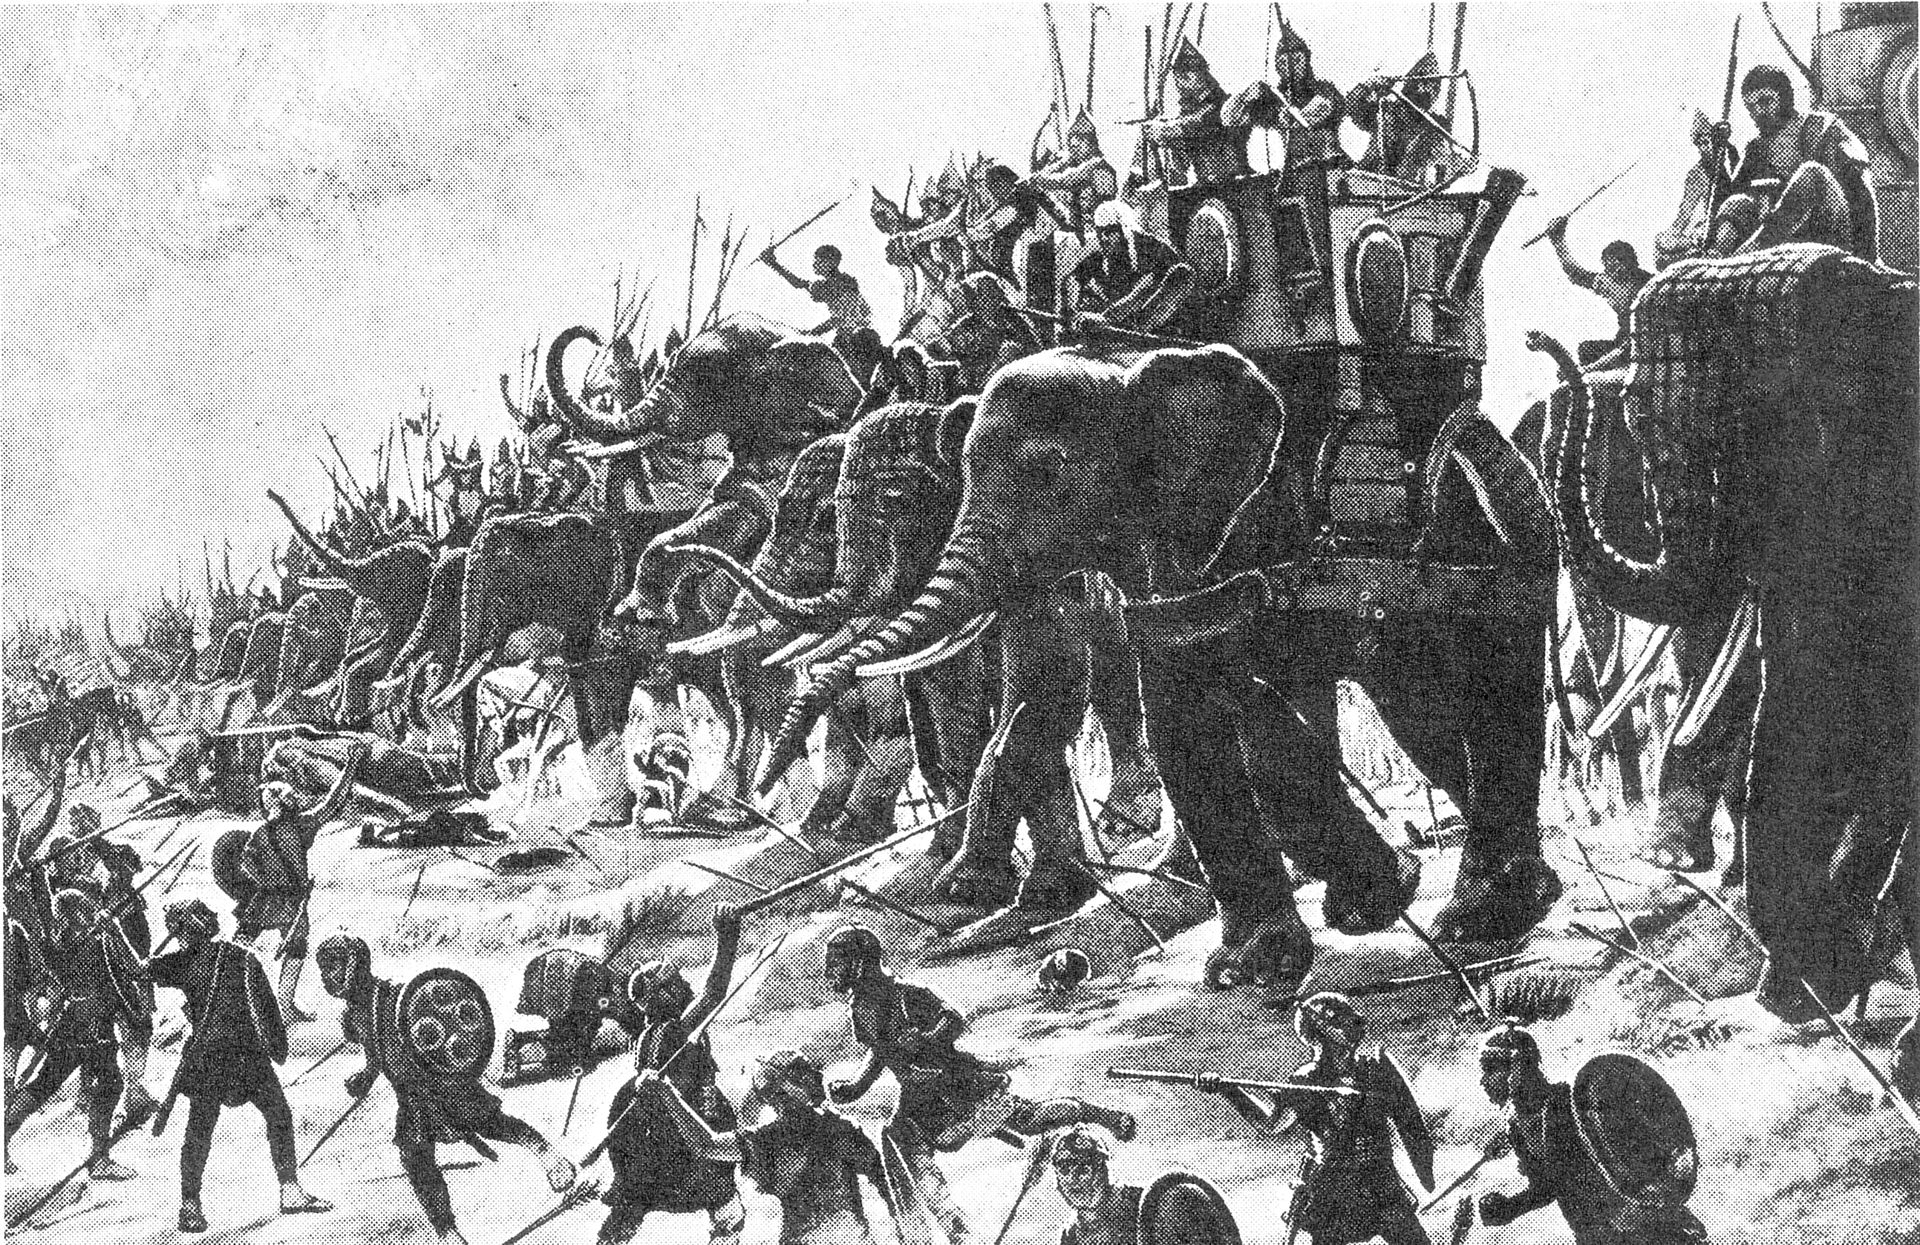 Carthaginian war elephants engage Roman infantry at the Battle of Zama (202 BC)